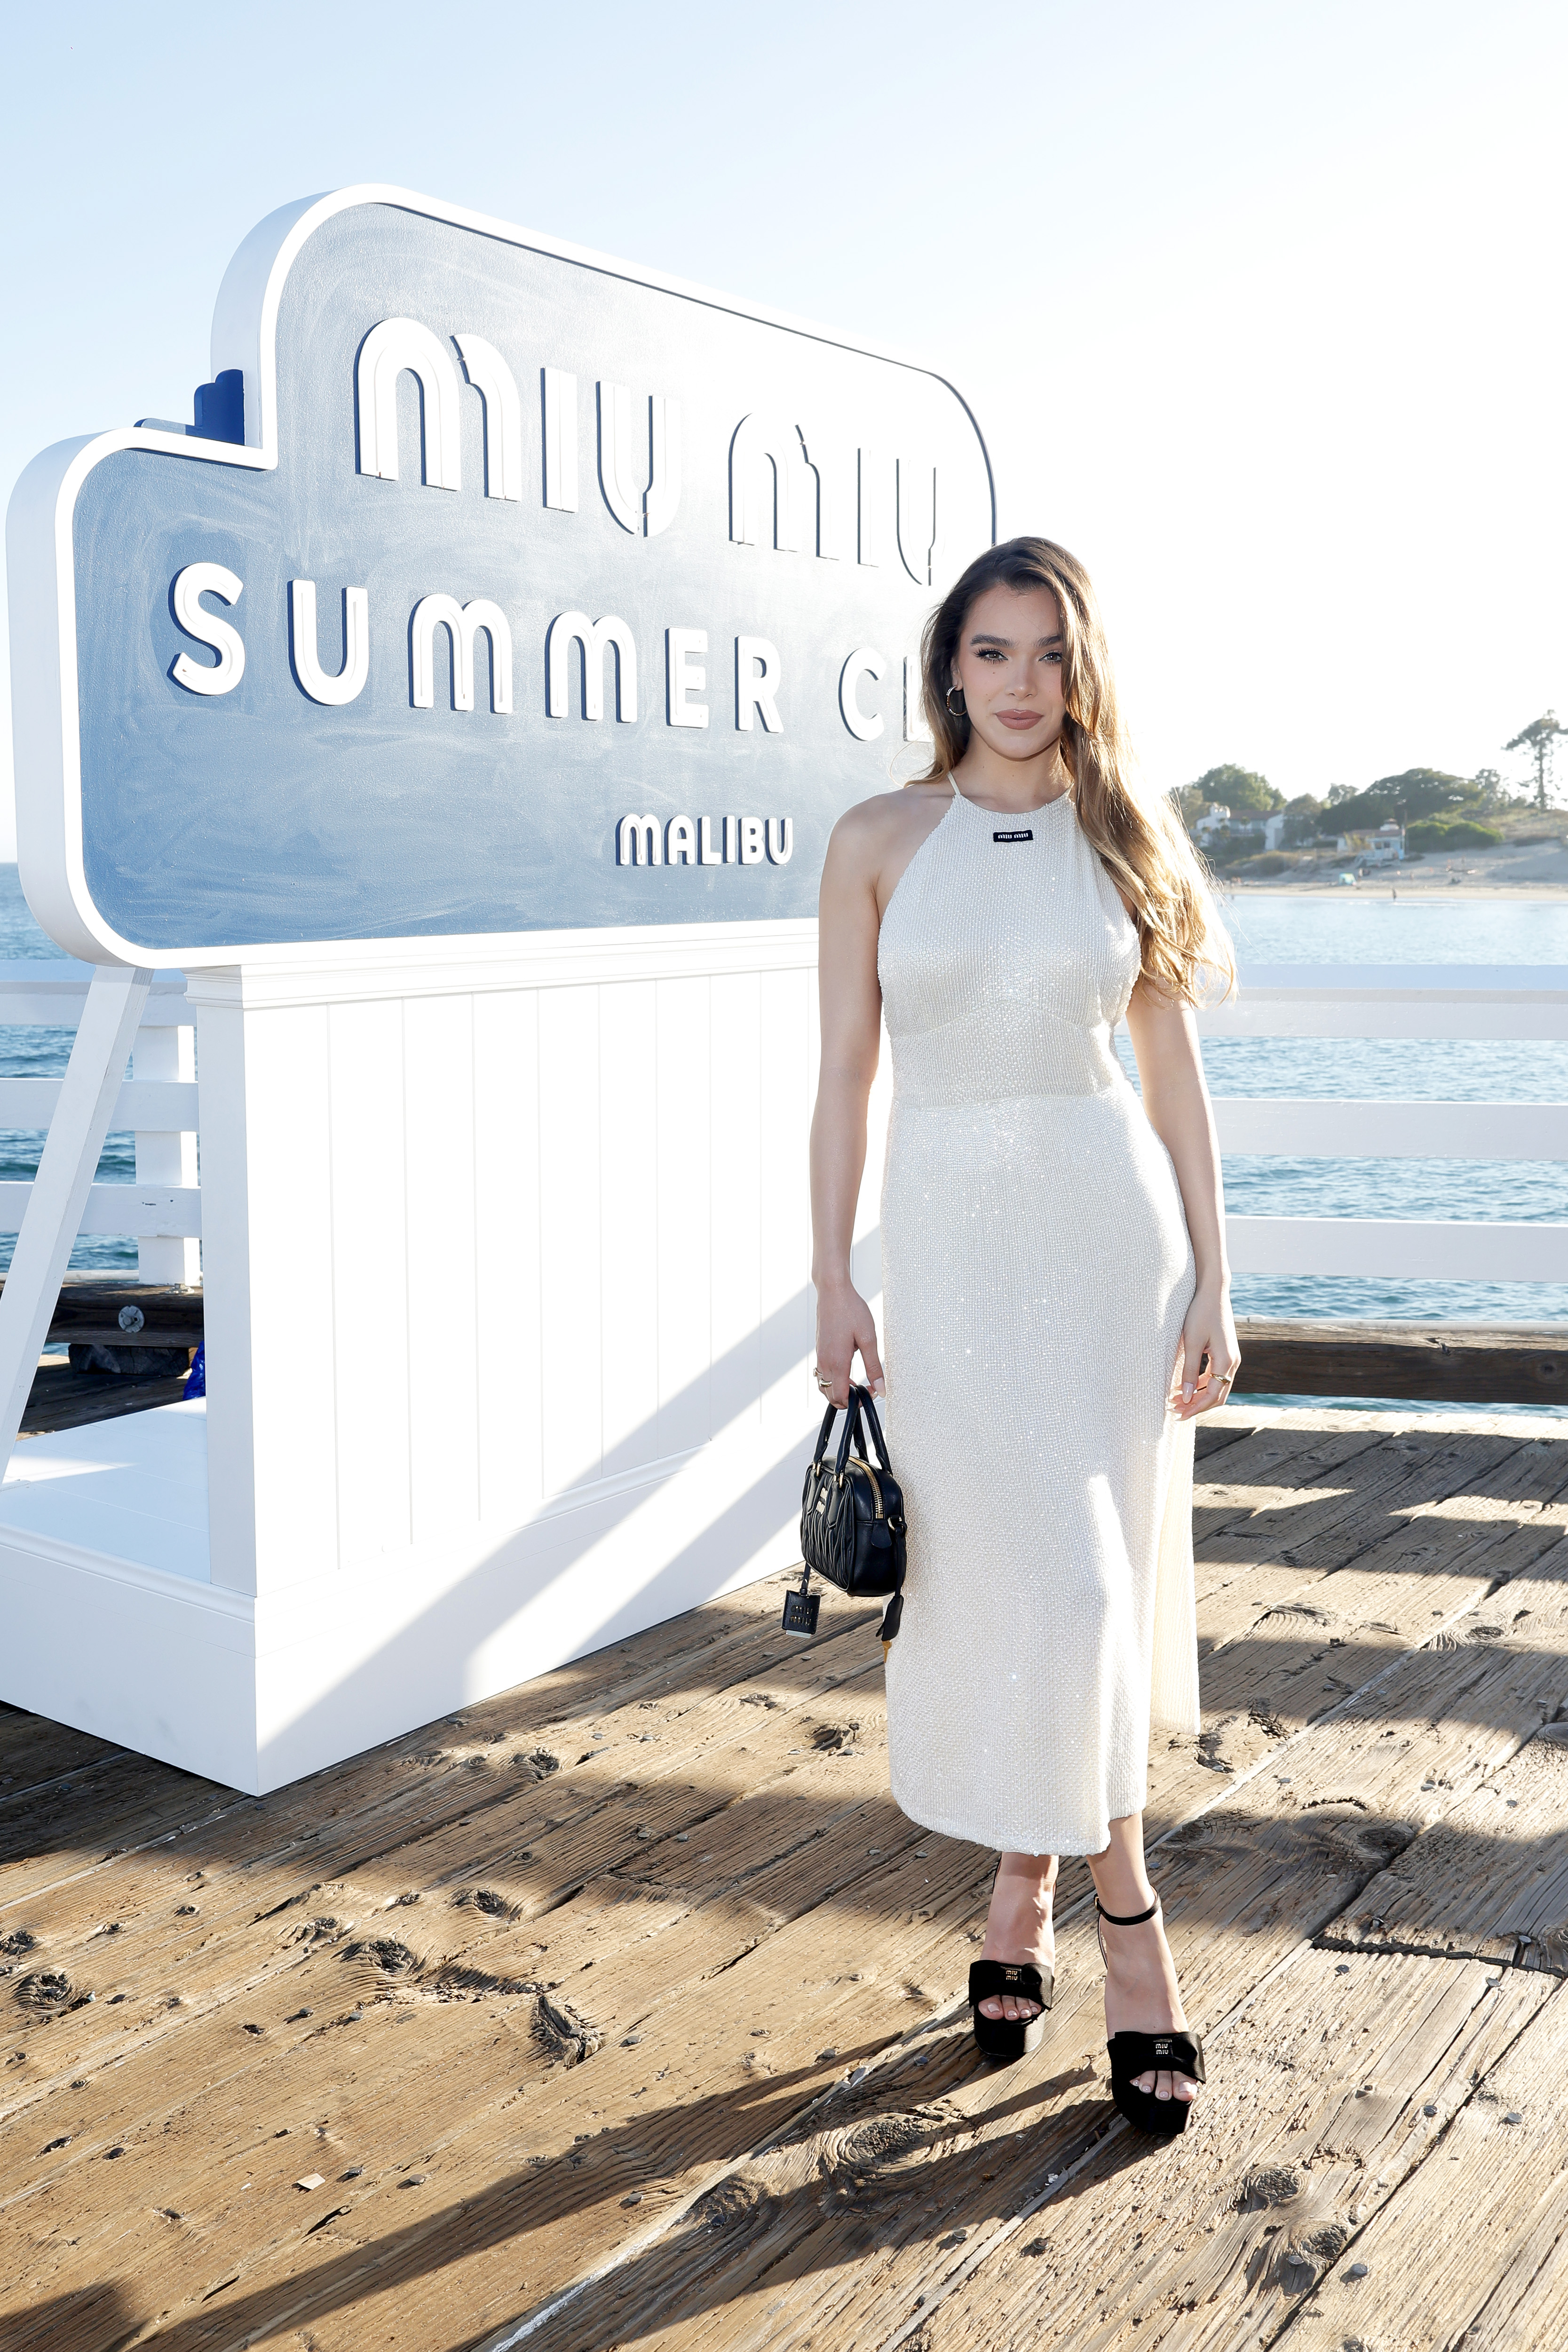 Miu Miu Summer Club celebrates women with star guest Gigi Hadid